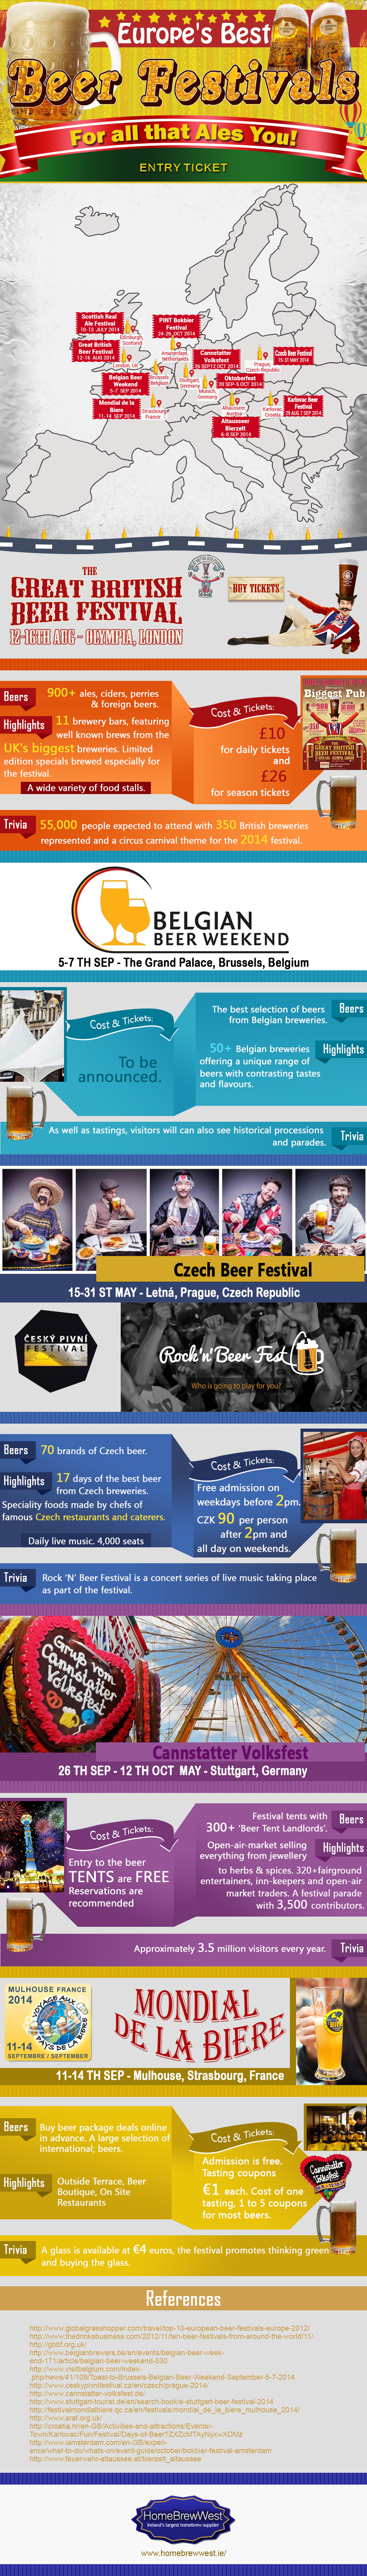 europe's best beer festivals